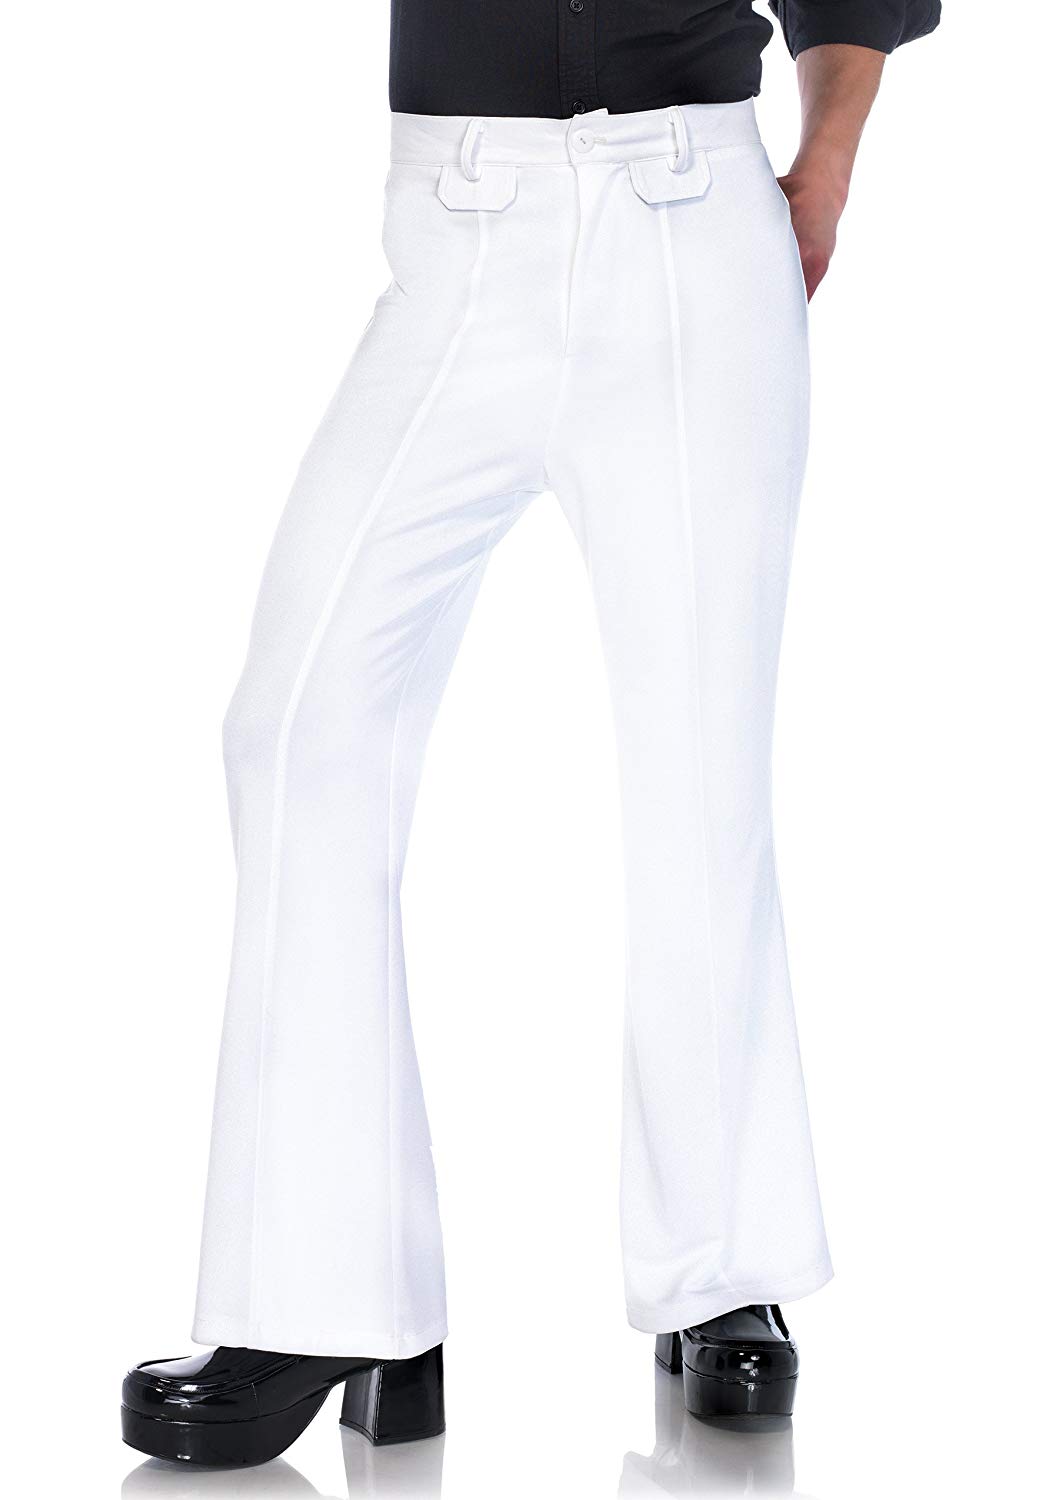 Men's Bell Bottom Pants White Perth | Hurly Burly – Hurly-Burly